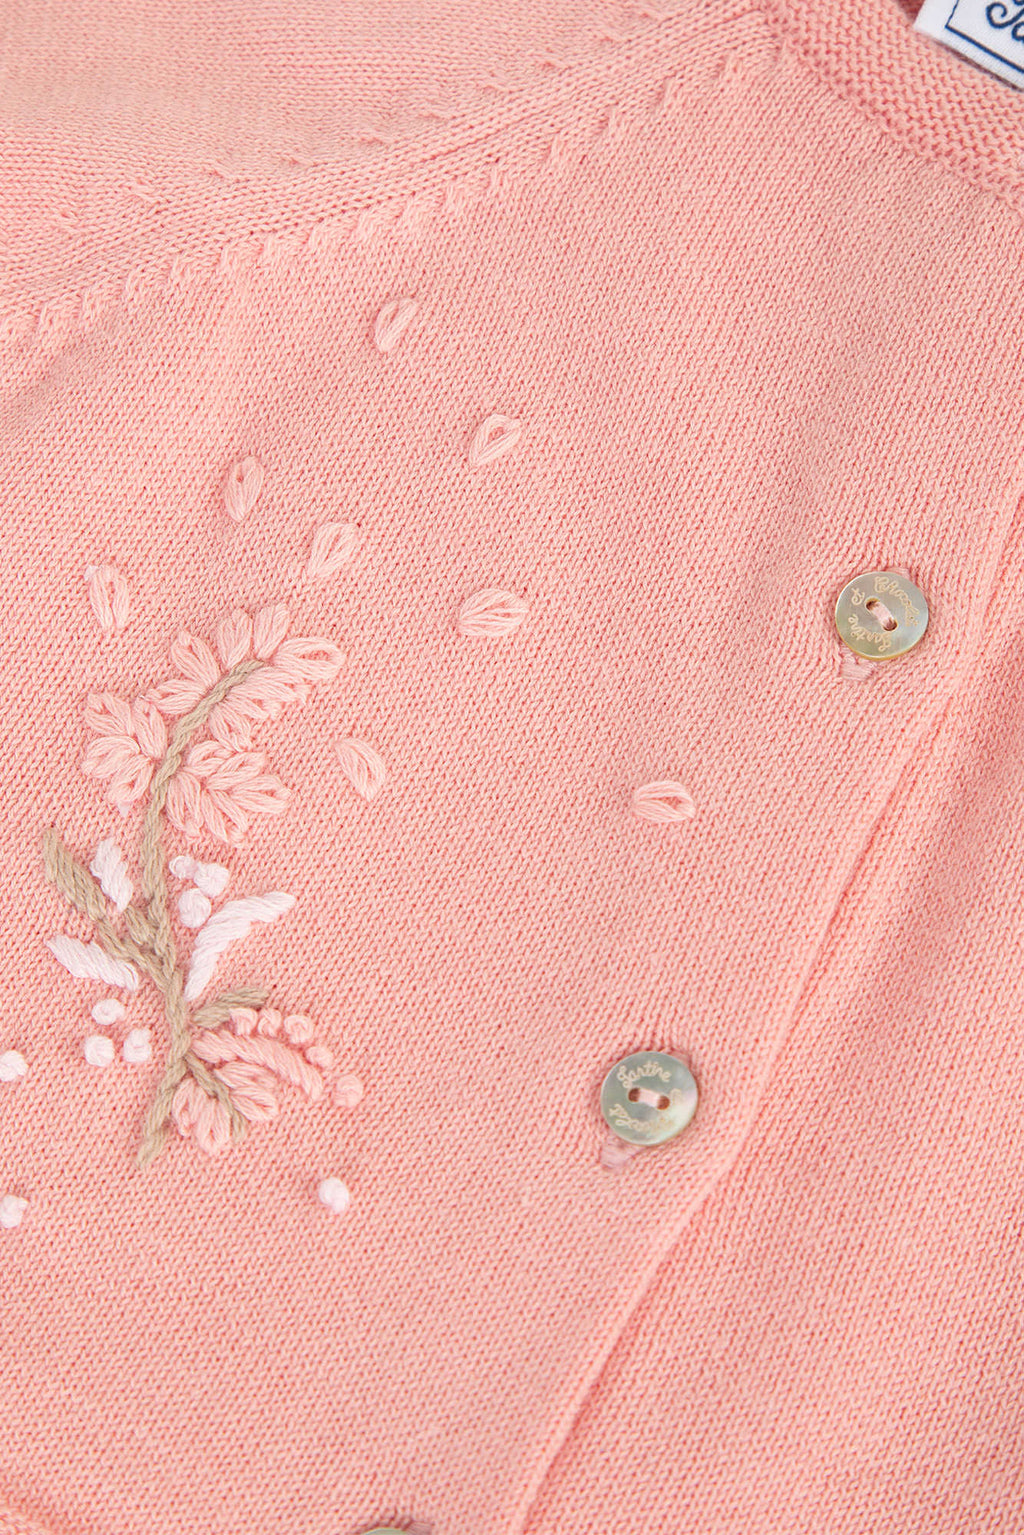 Cardigan - Knitting Cotton Peony Flowers Embroidery